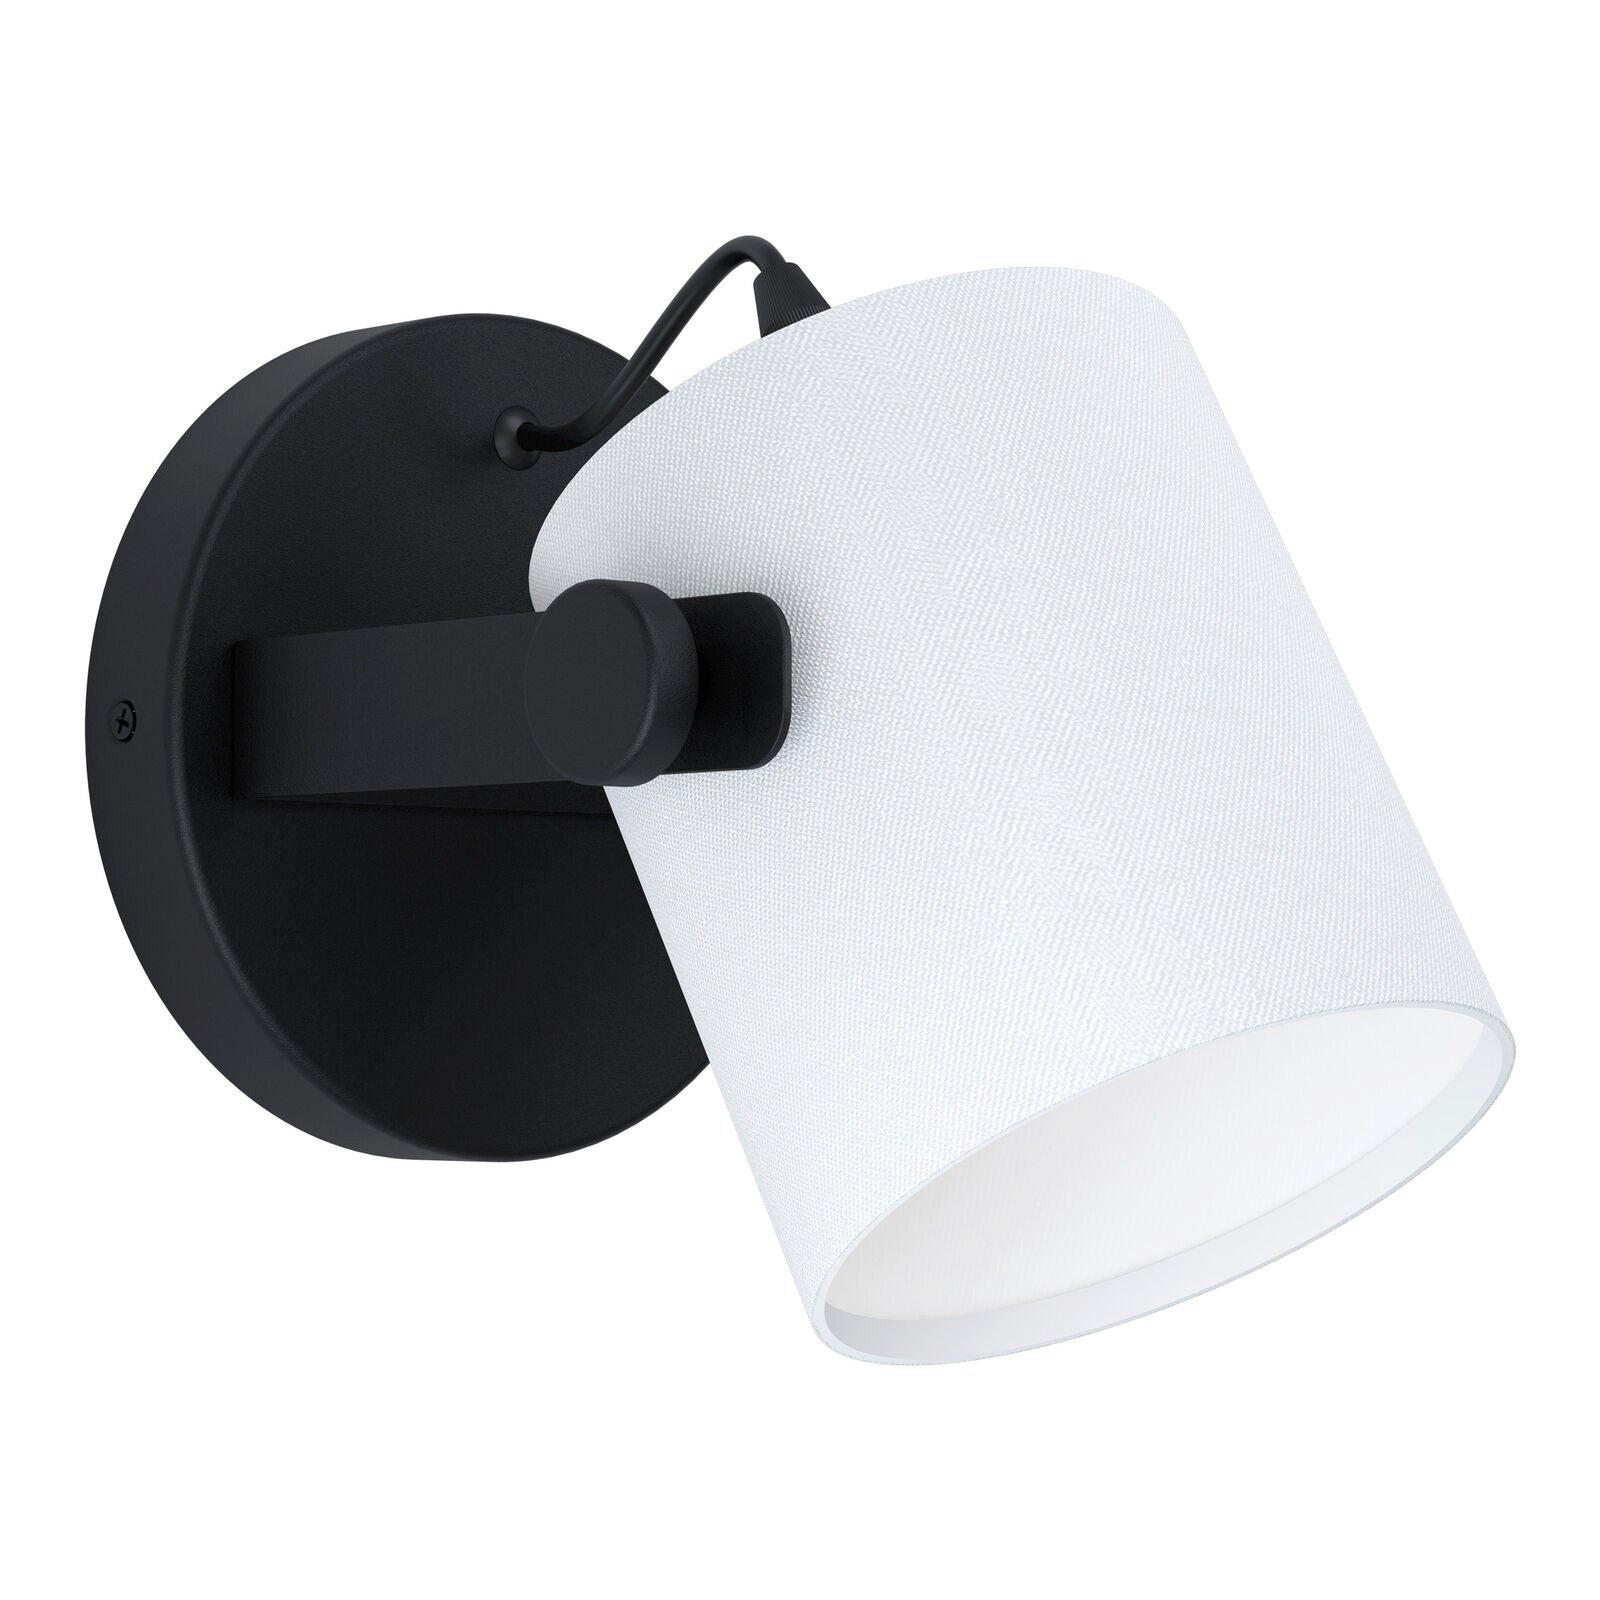 LED Wall Light / Sconce Black Steel & White Fabric Shade 1 x 28W E27 Bulb